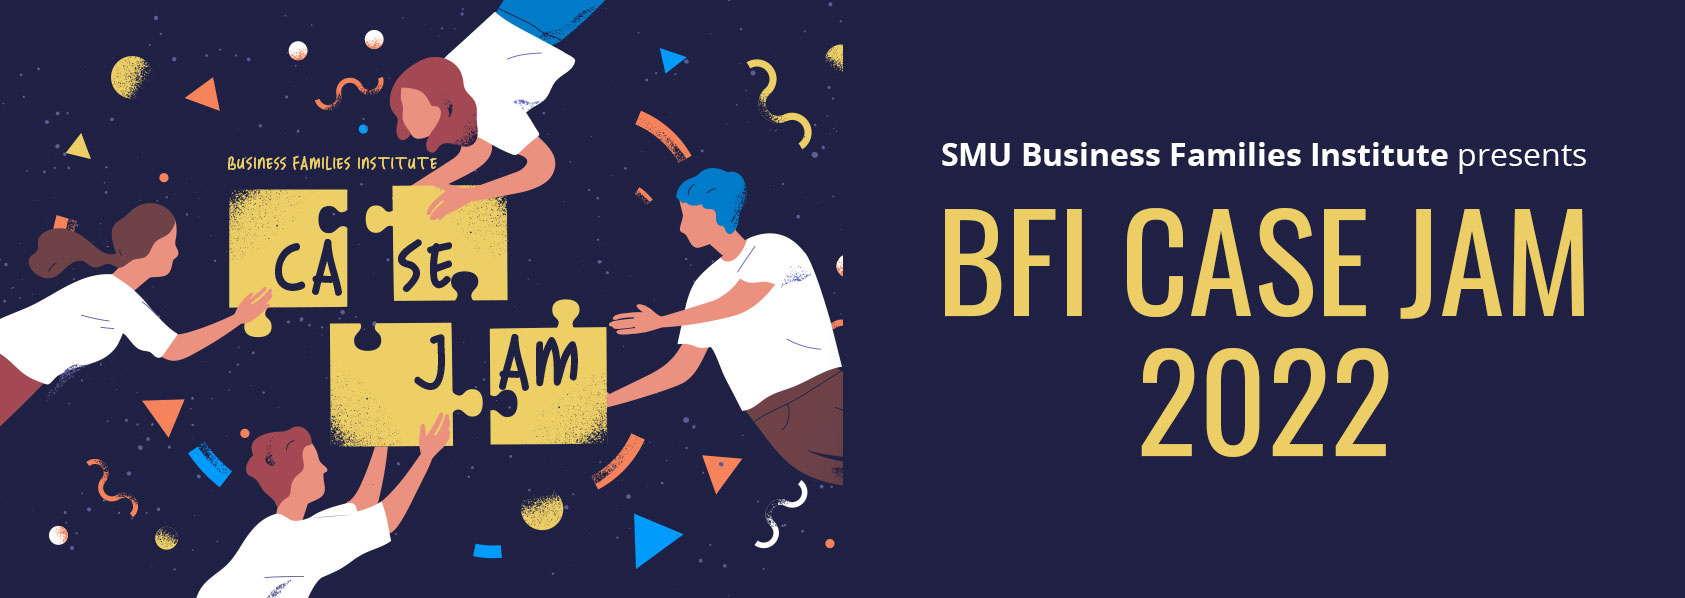 SMU Business Families Institute presents BFI CASE JAM 2022